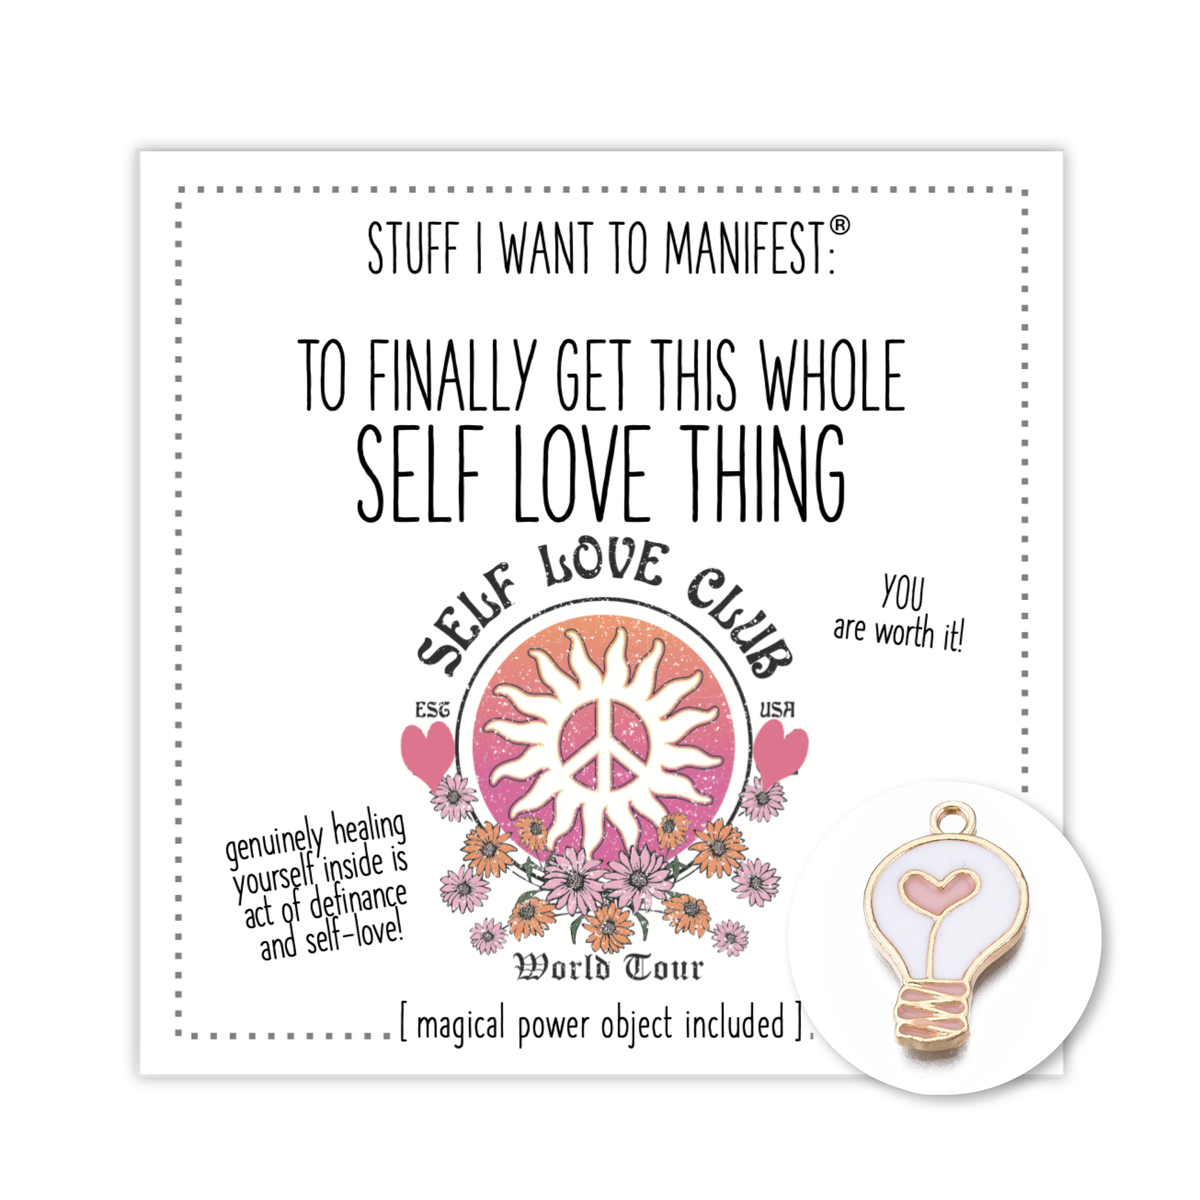 Stuff I Want To Manifest :  SELF-LOVE THING